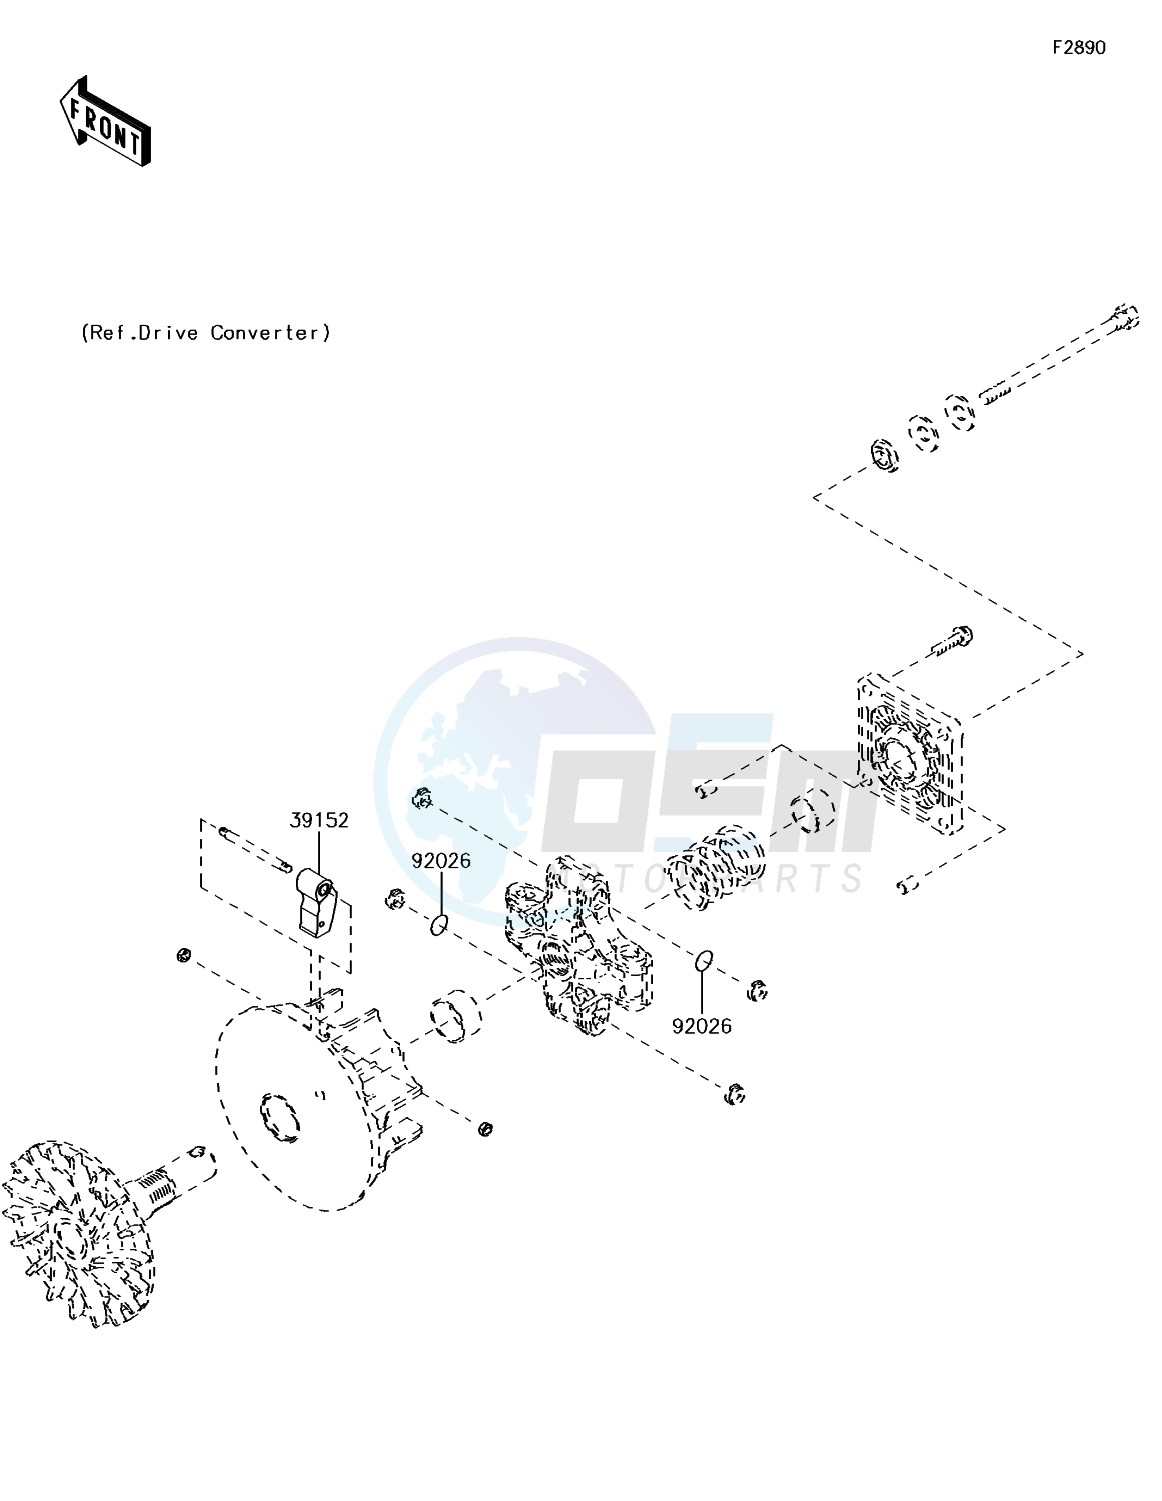 Optional Parts(Engine) blueprint